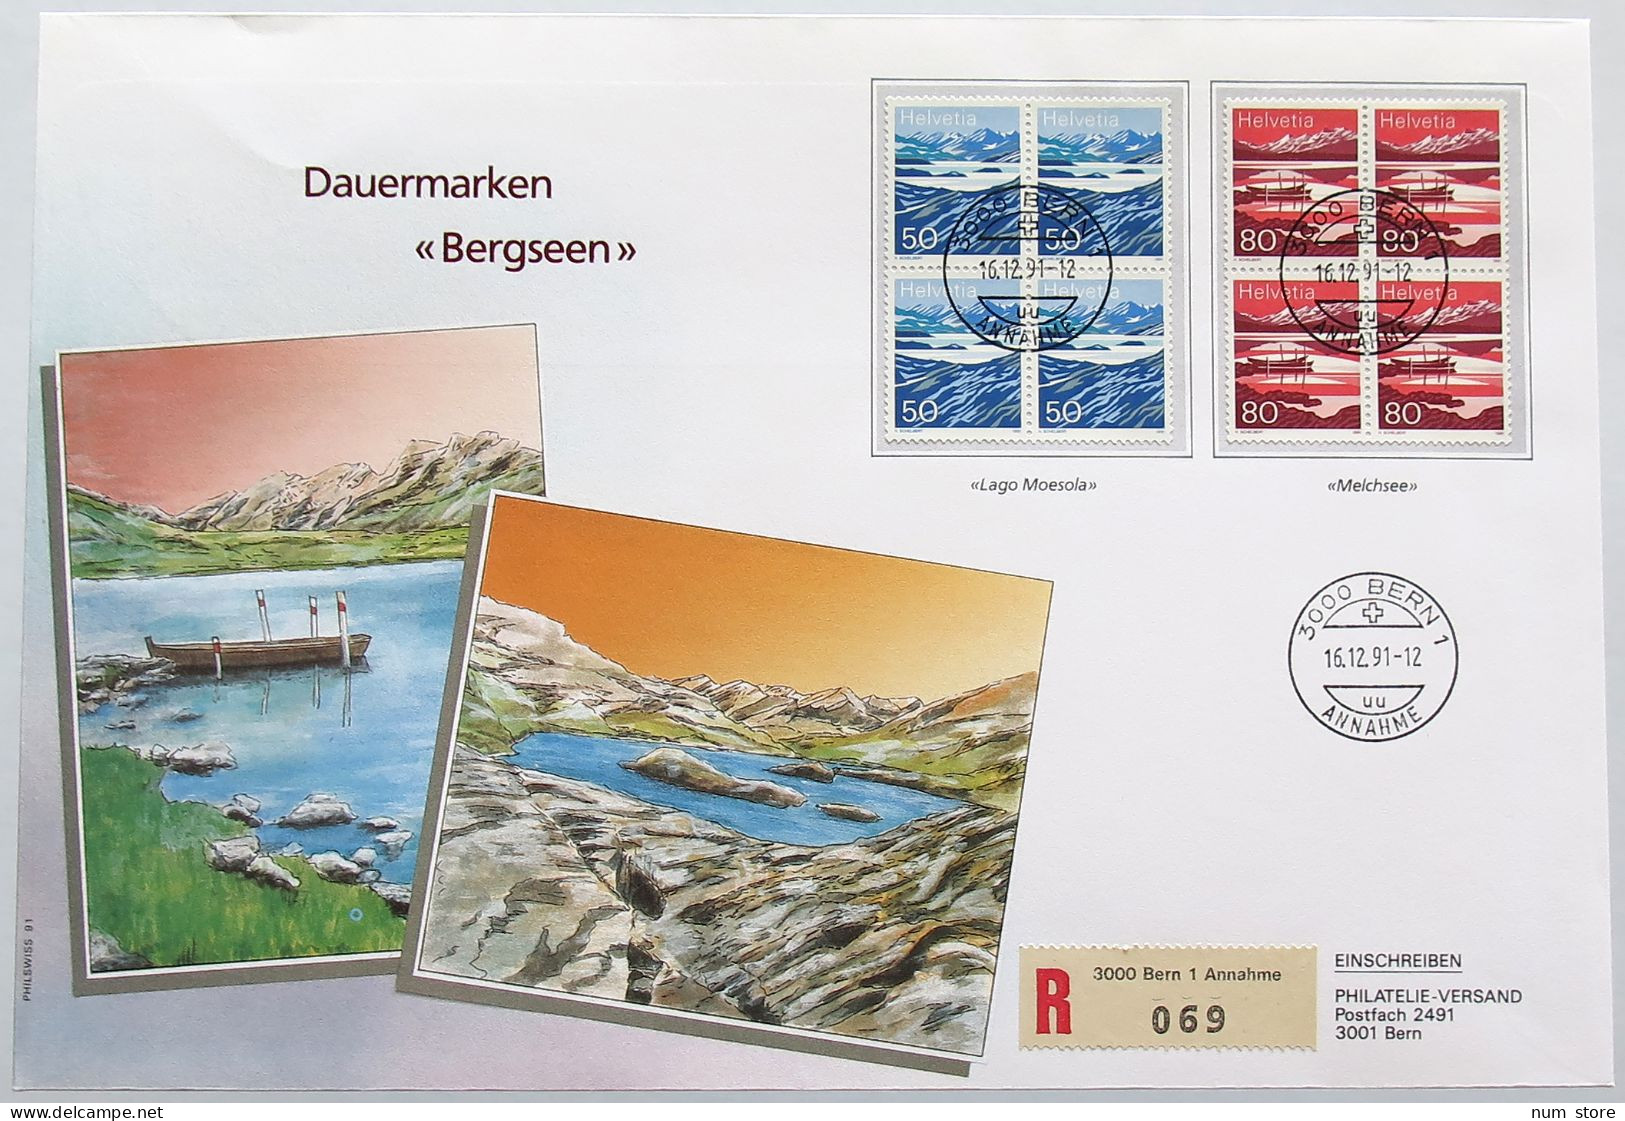 SWITZERLAND STAMPS, STATIONERY DAUERMARKEN BERGSEEN 1991 #alb006 0049 - Switzerland